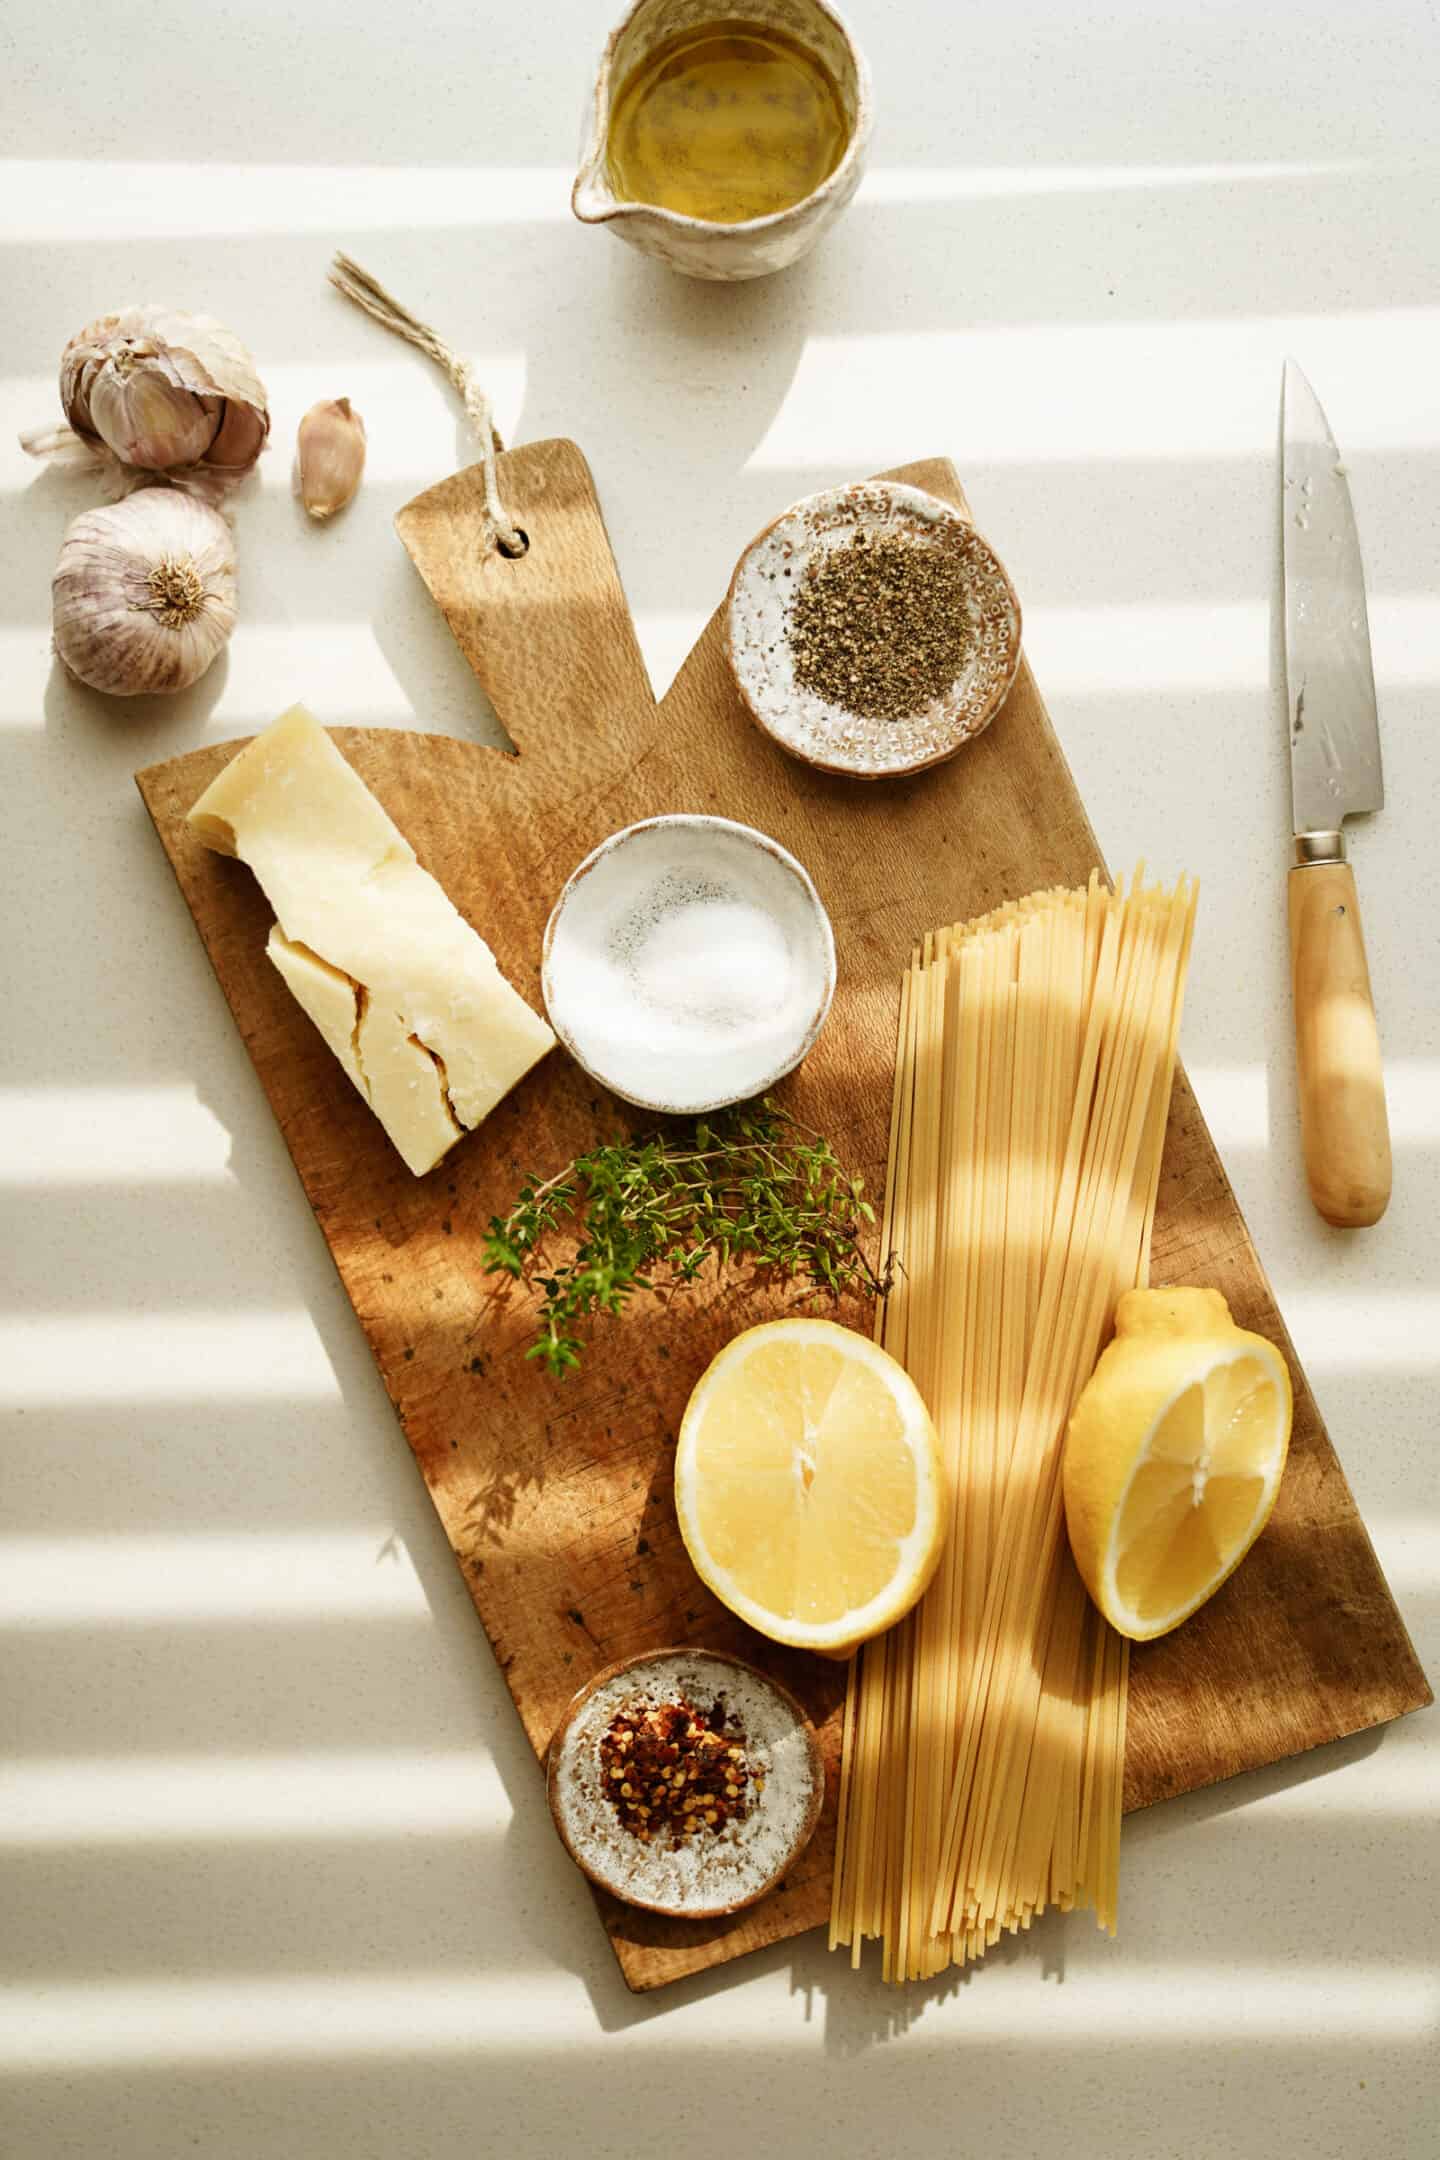 Ingredients for aglio e olio